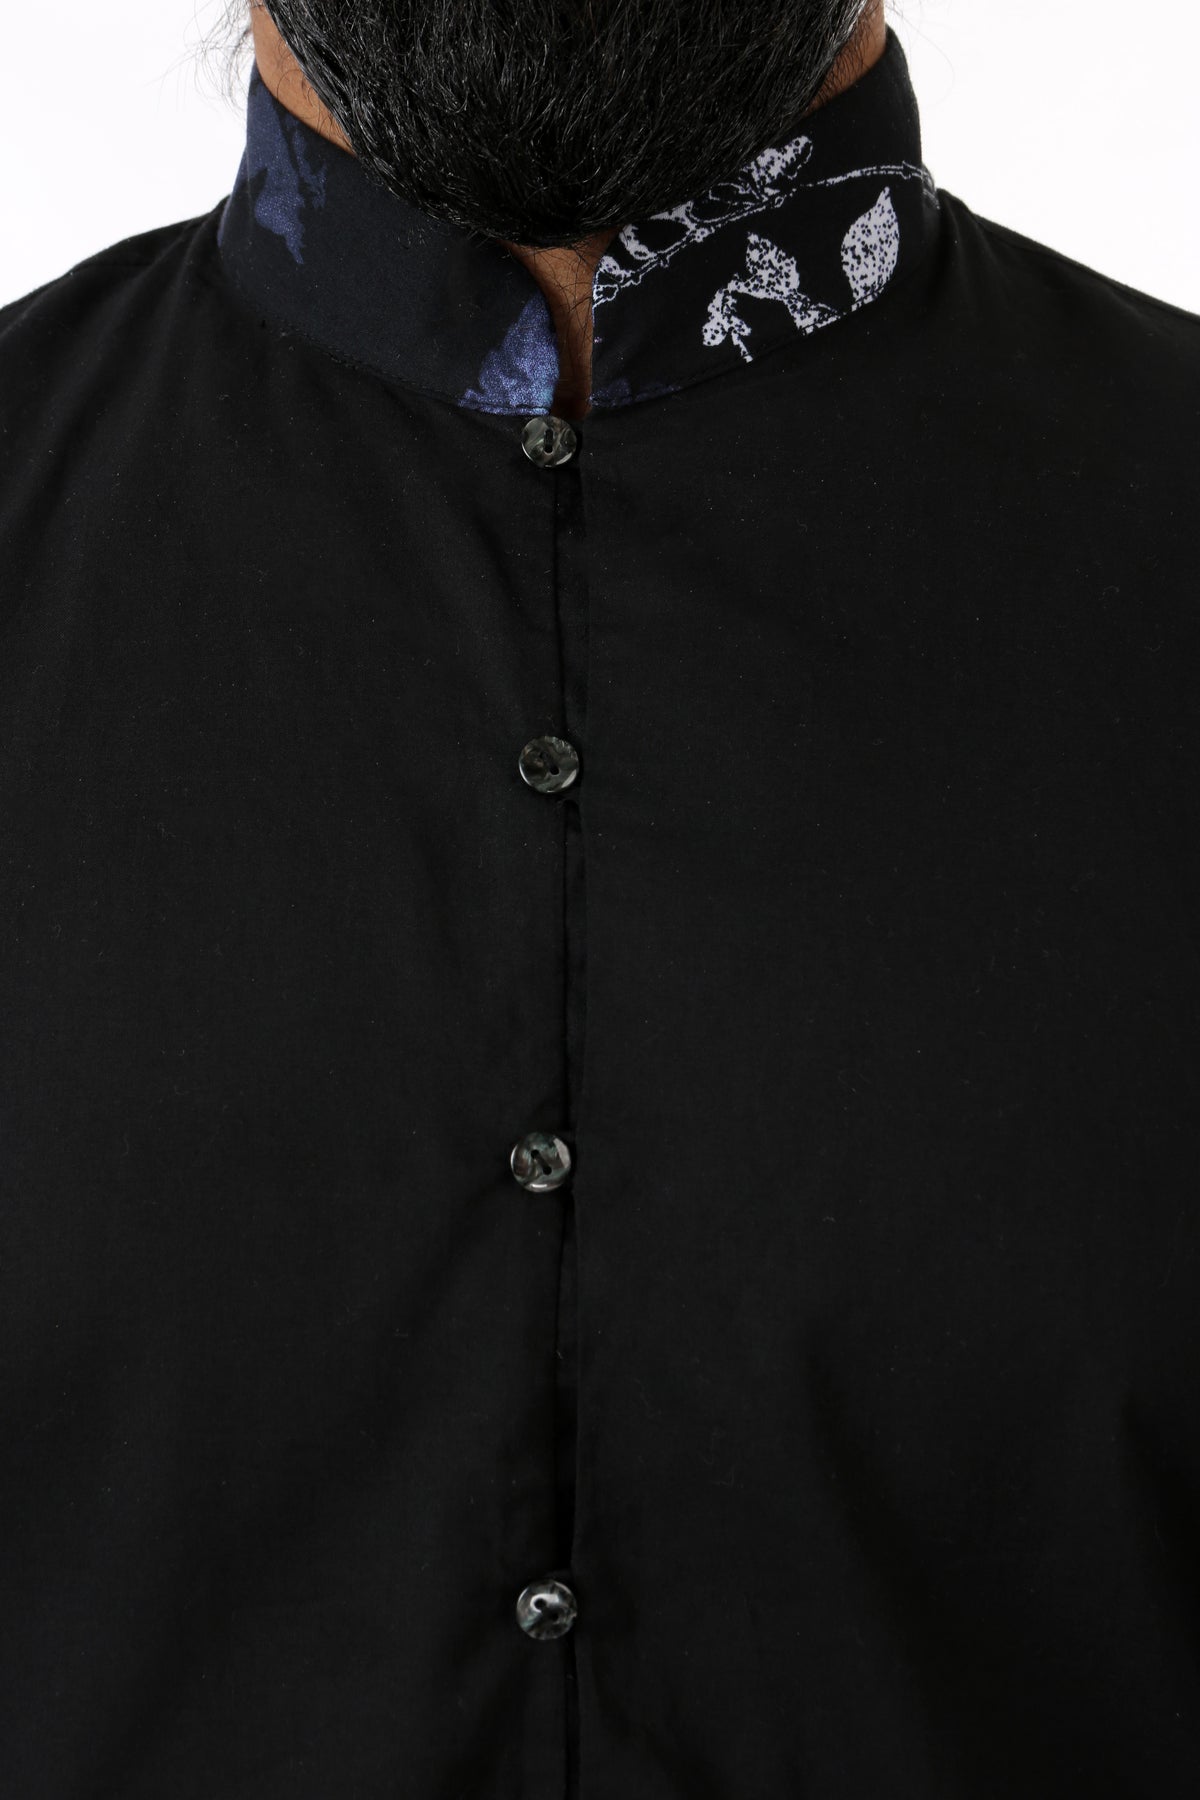 Harleen Kaur SUMEET Black Kurta with Black Multifloral Print Collar- Front View